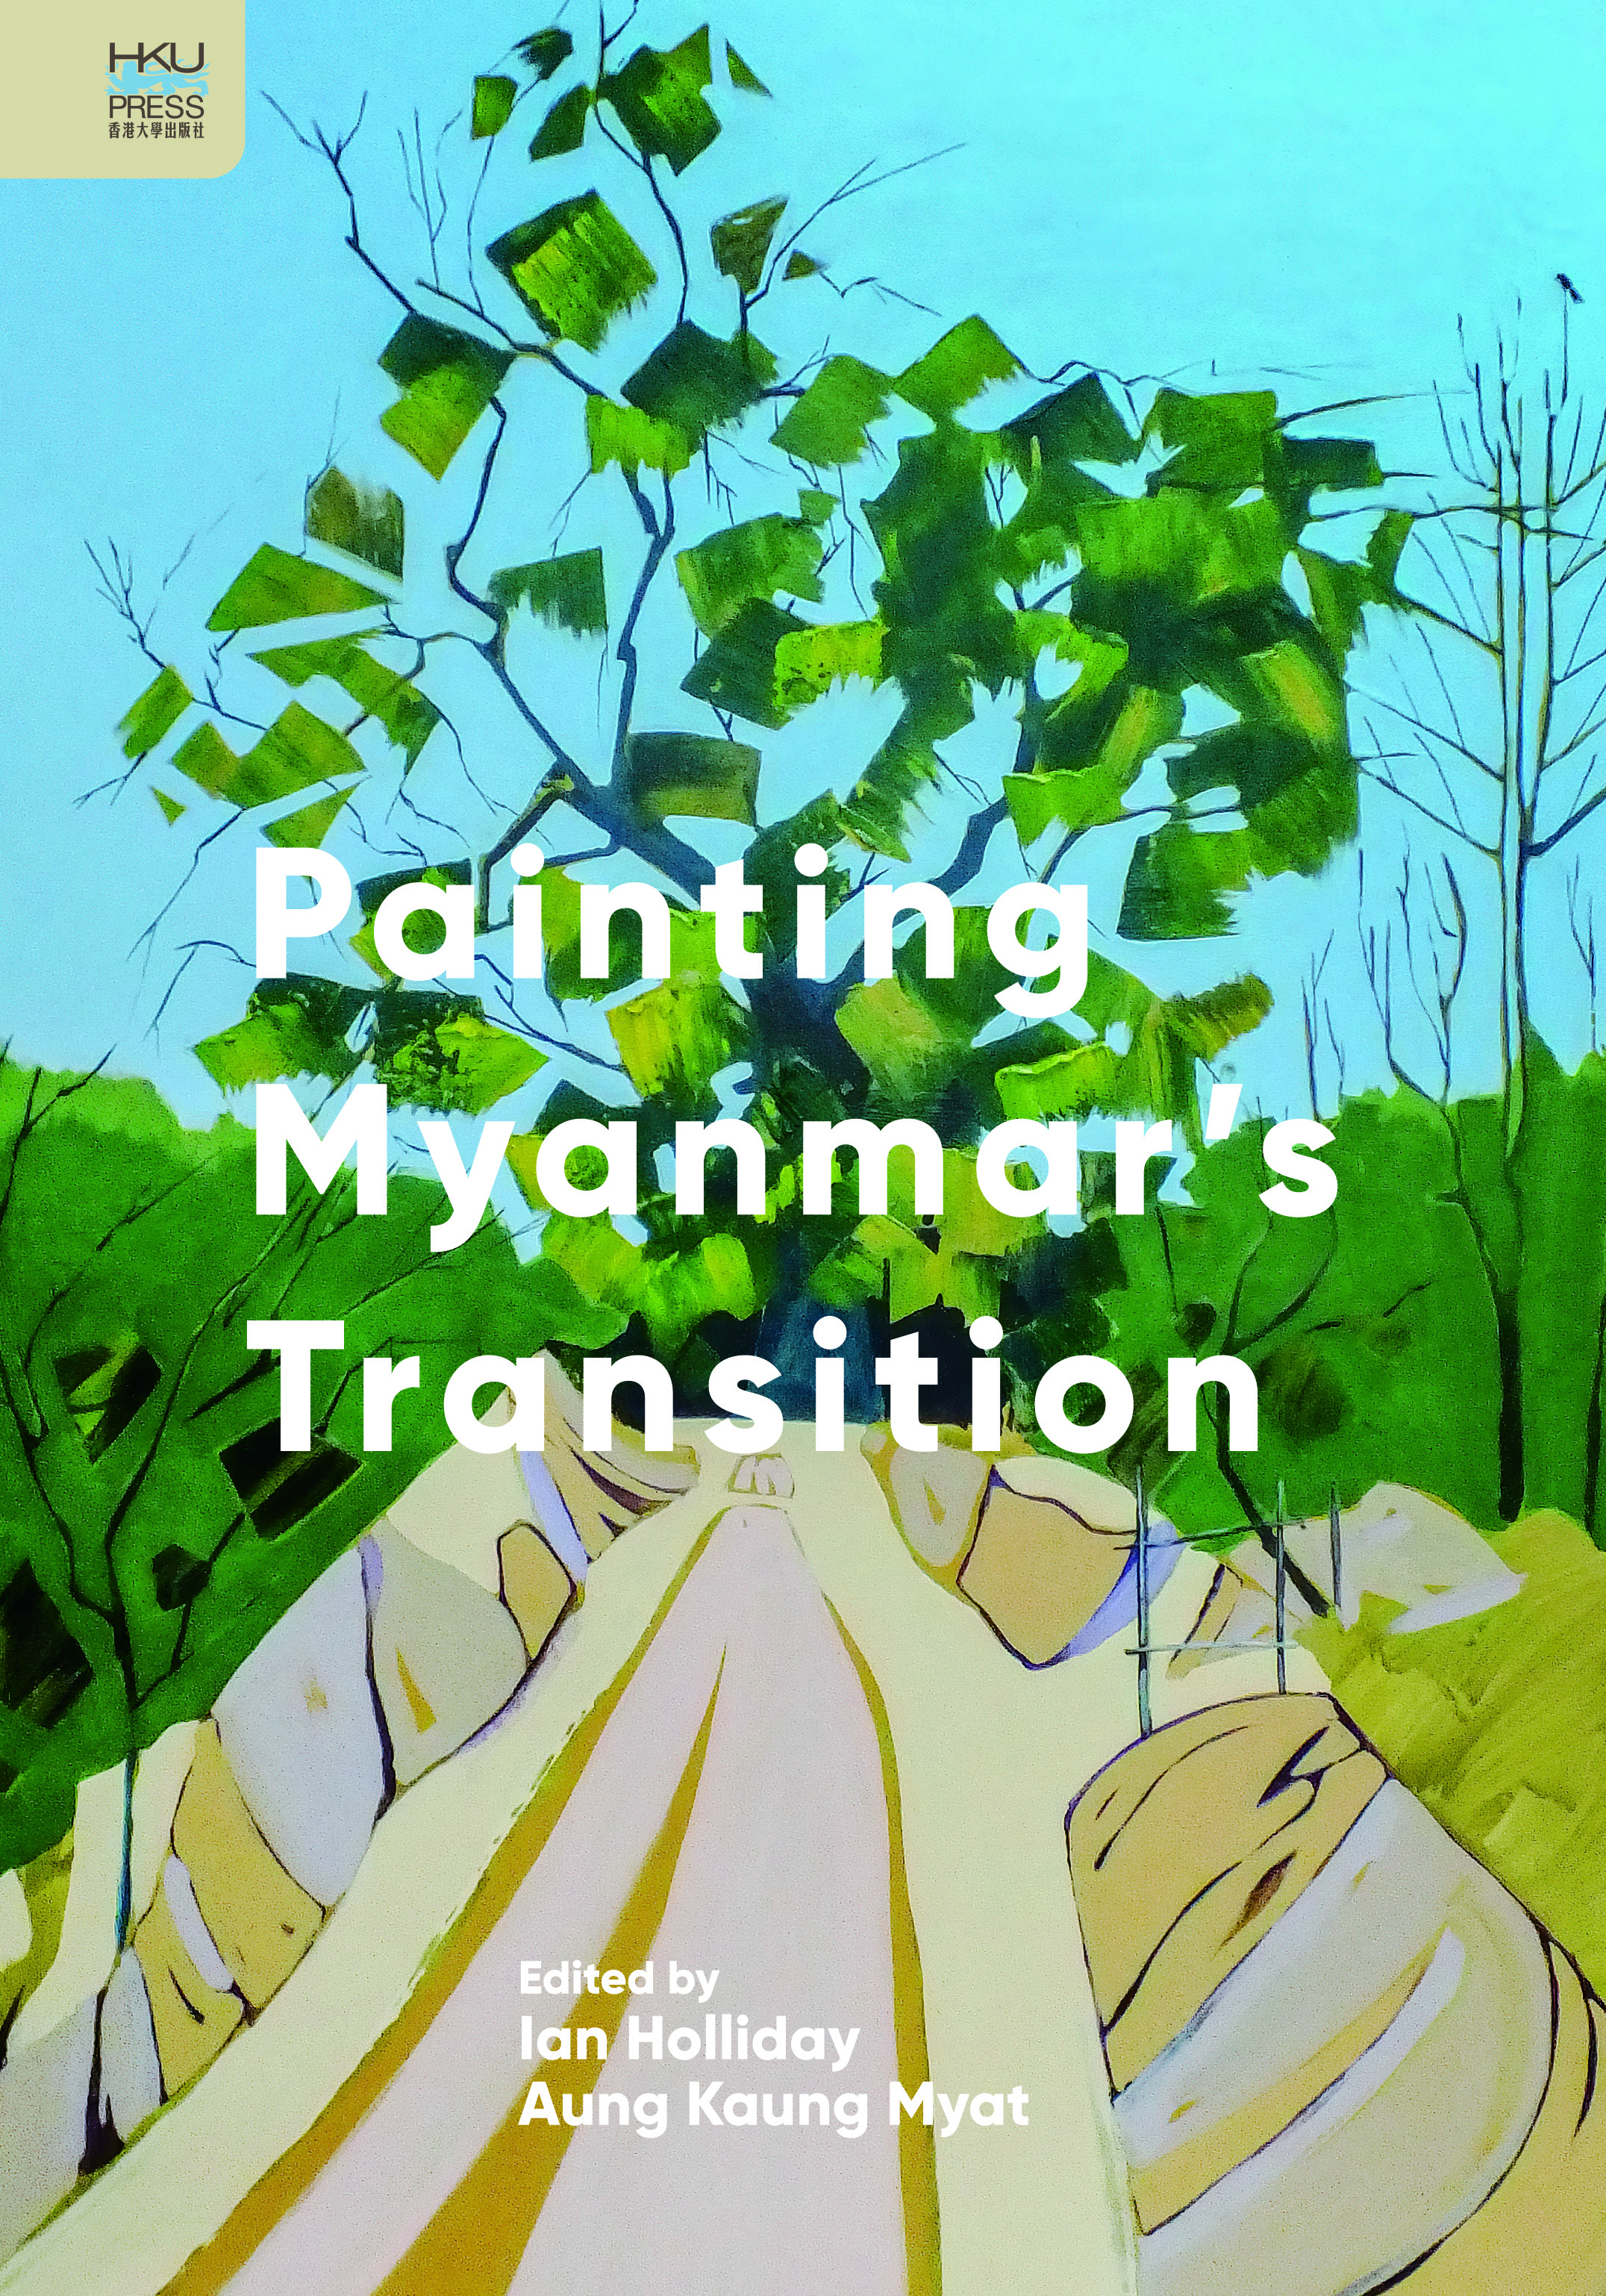 Painting Myanmarâs Transition cover.jpg